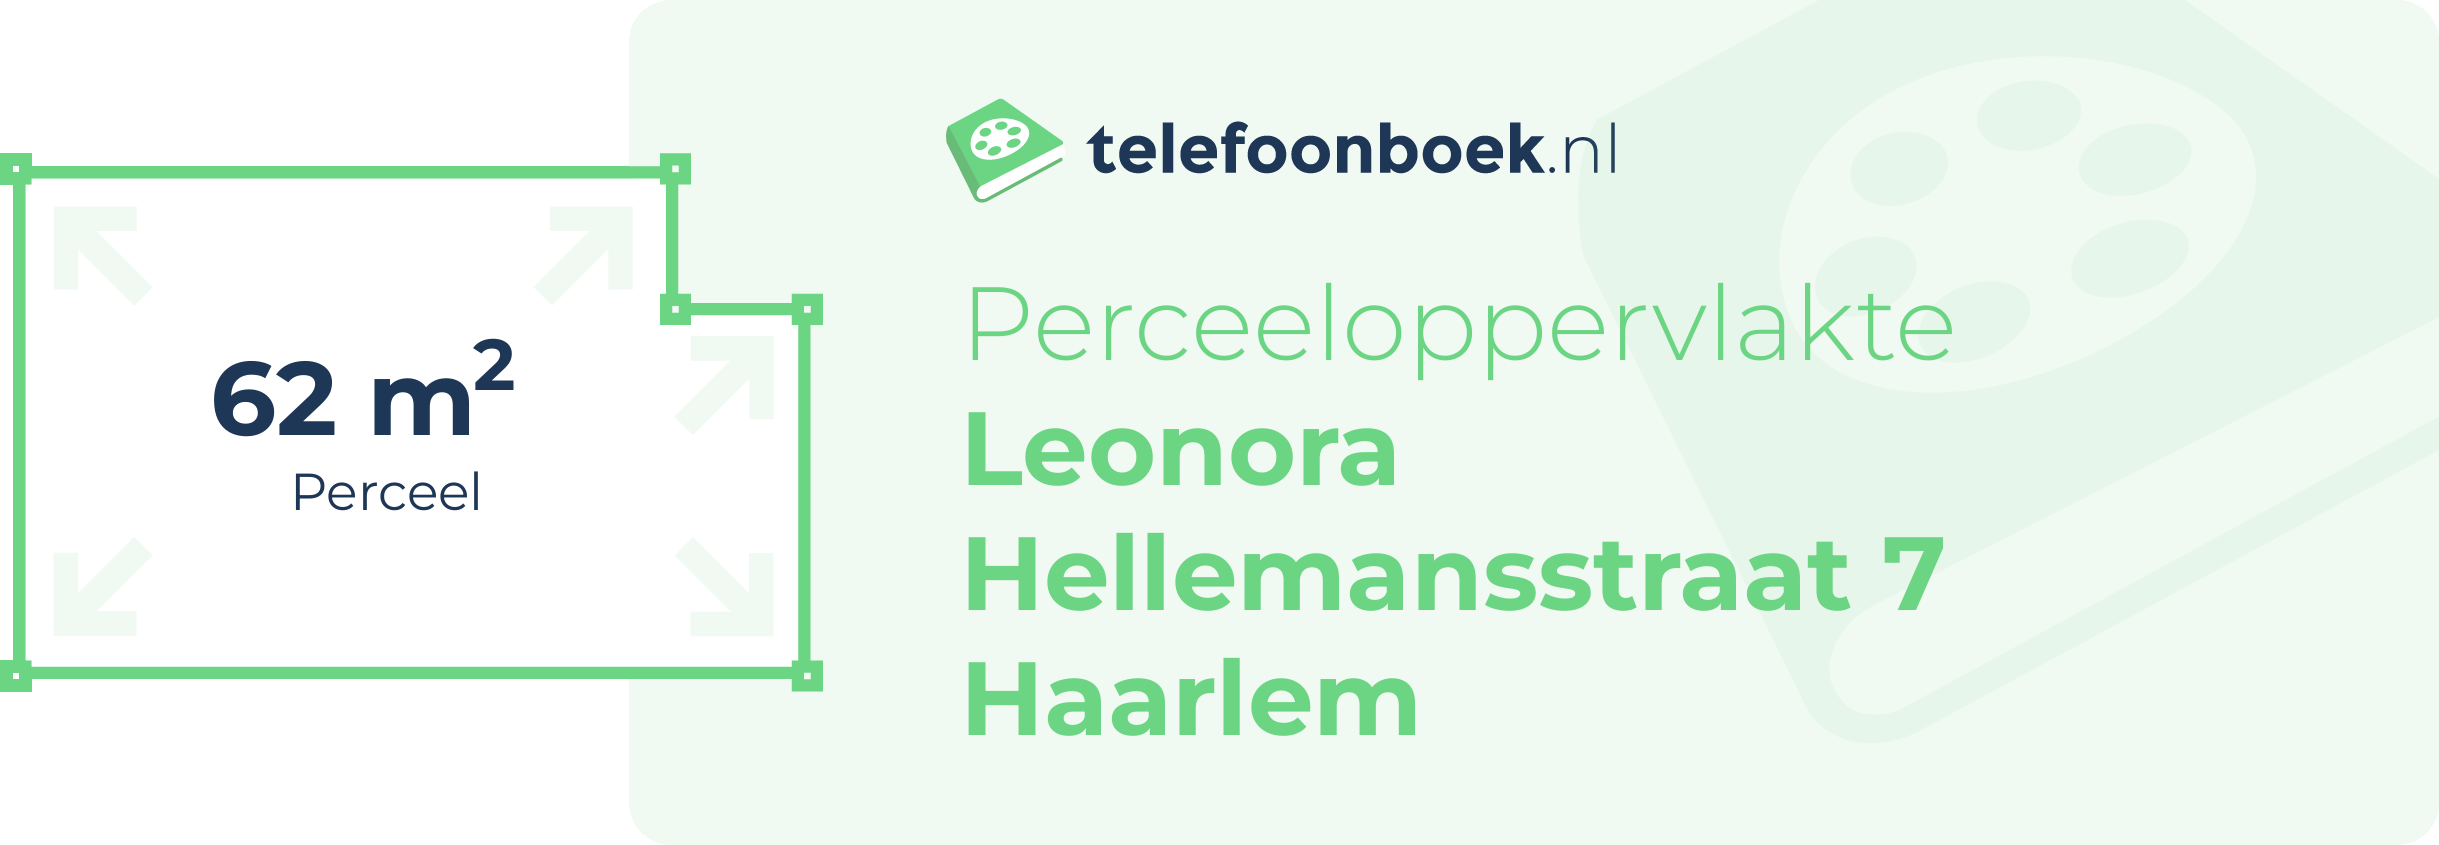 Perceeloppervlakte Leonora Hellemansstraat 7 Haarlem